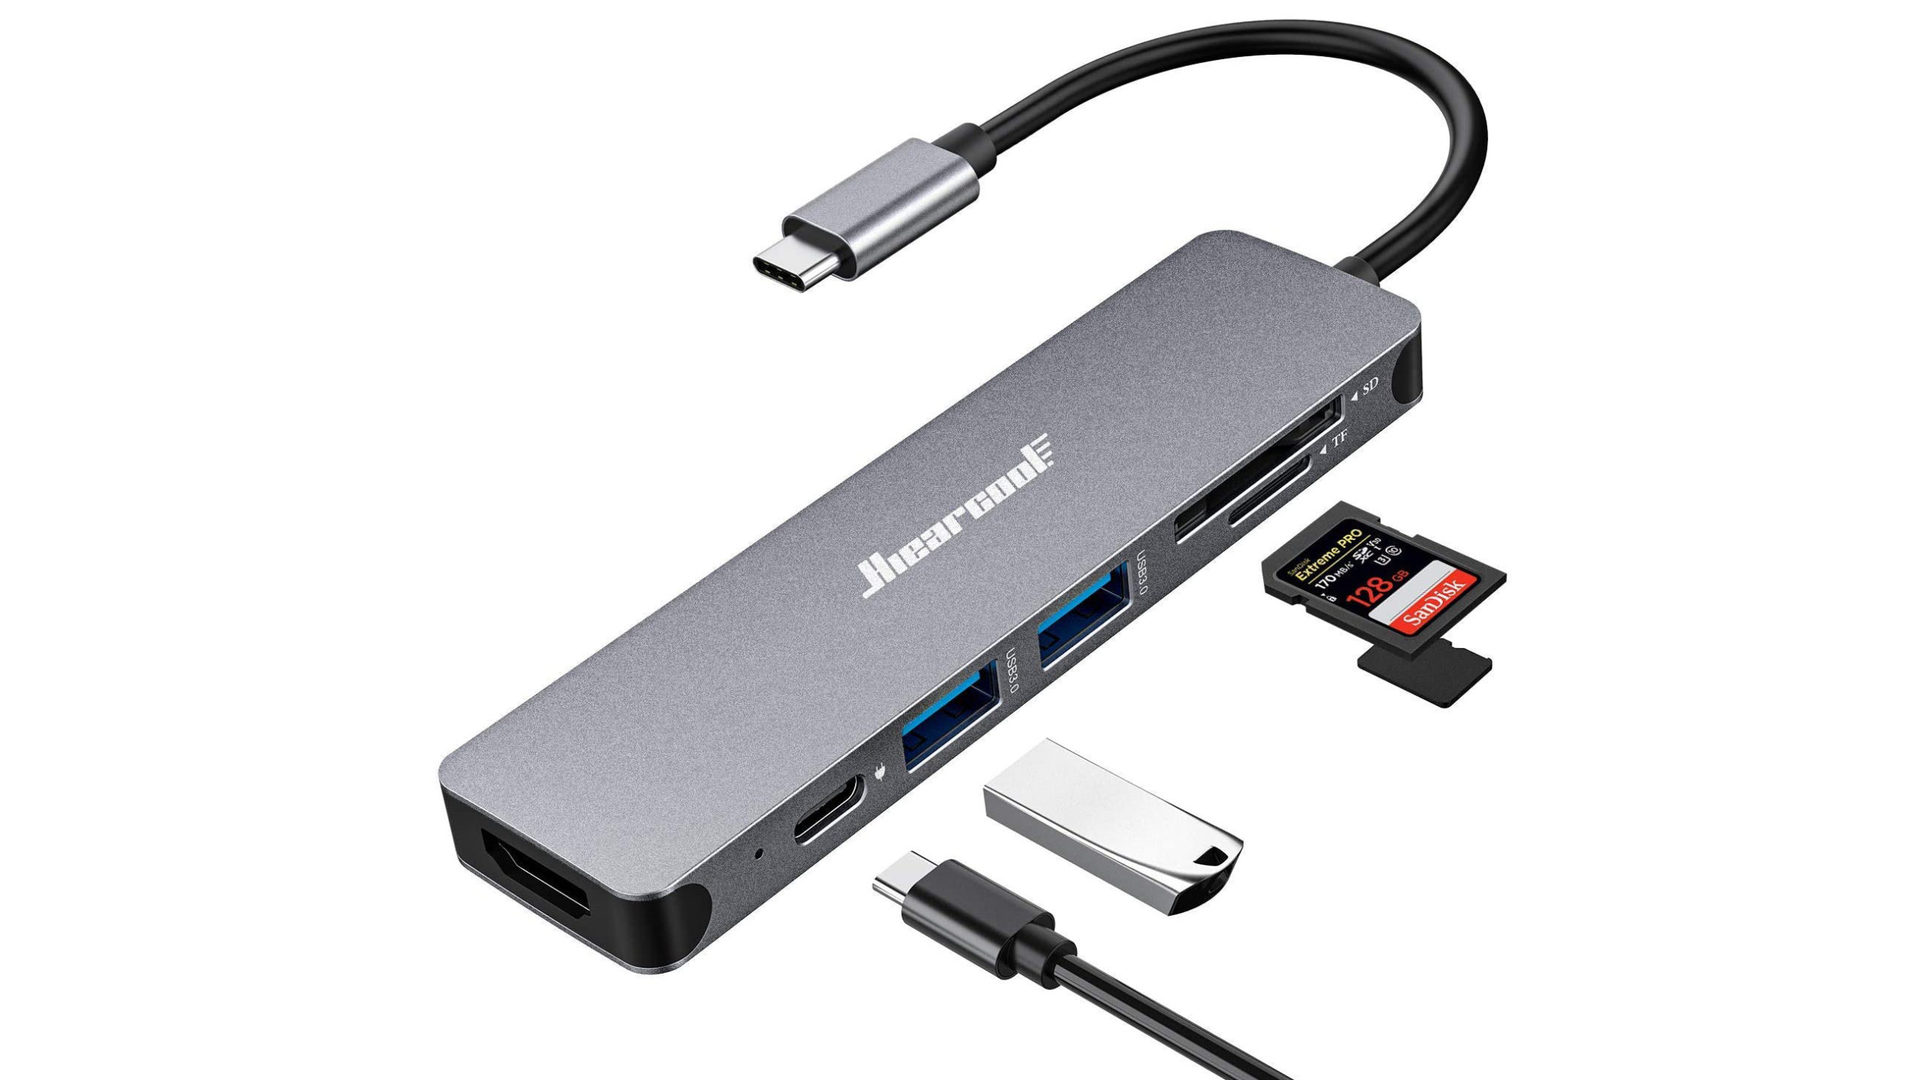  Hiearcool USB C Hub, USB C Multi-port Adapter for